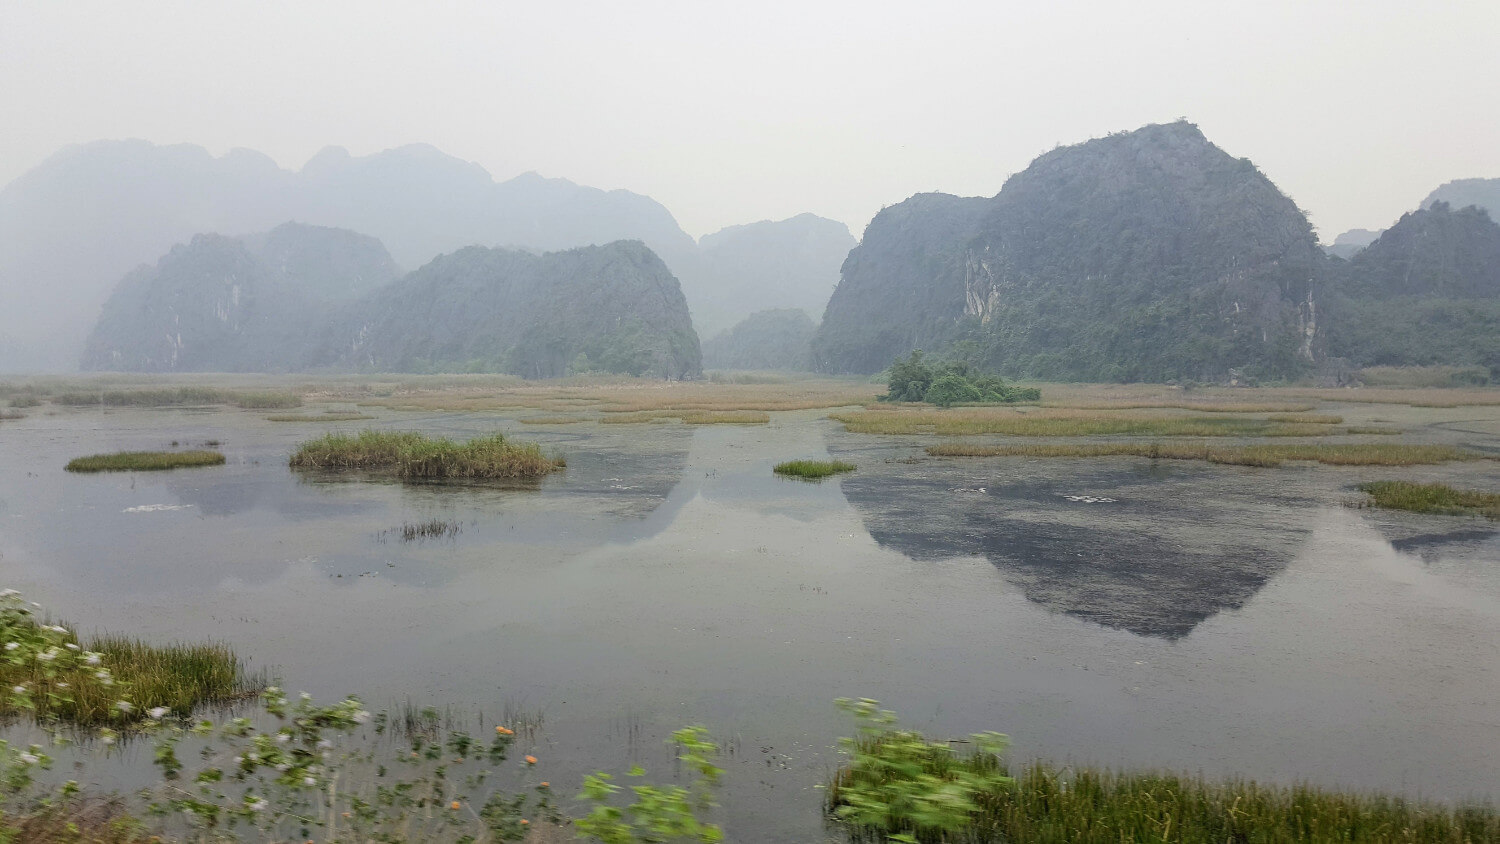 Balade sur l'eau à Vân Long